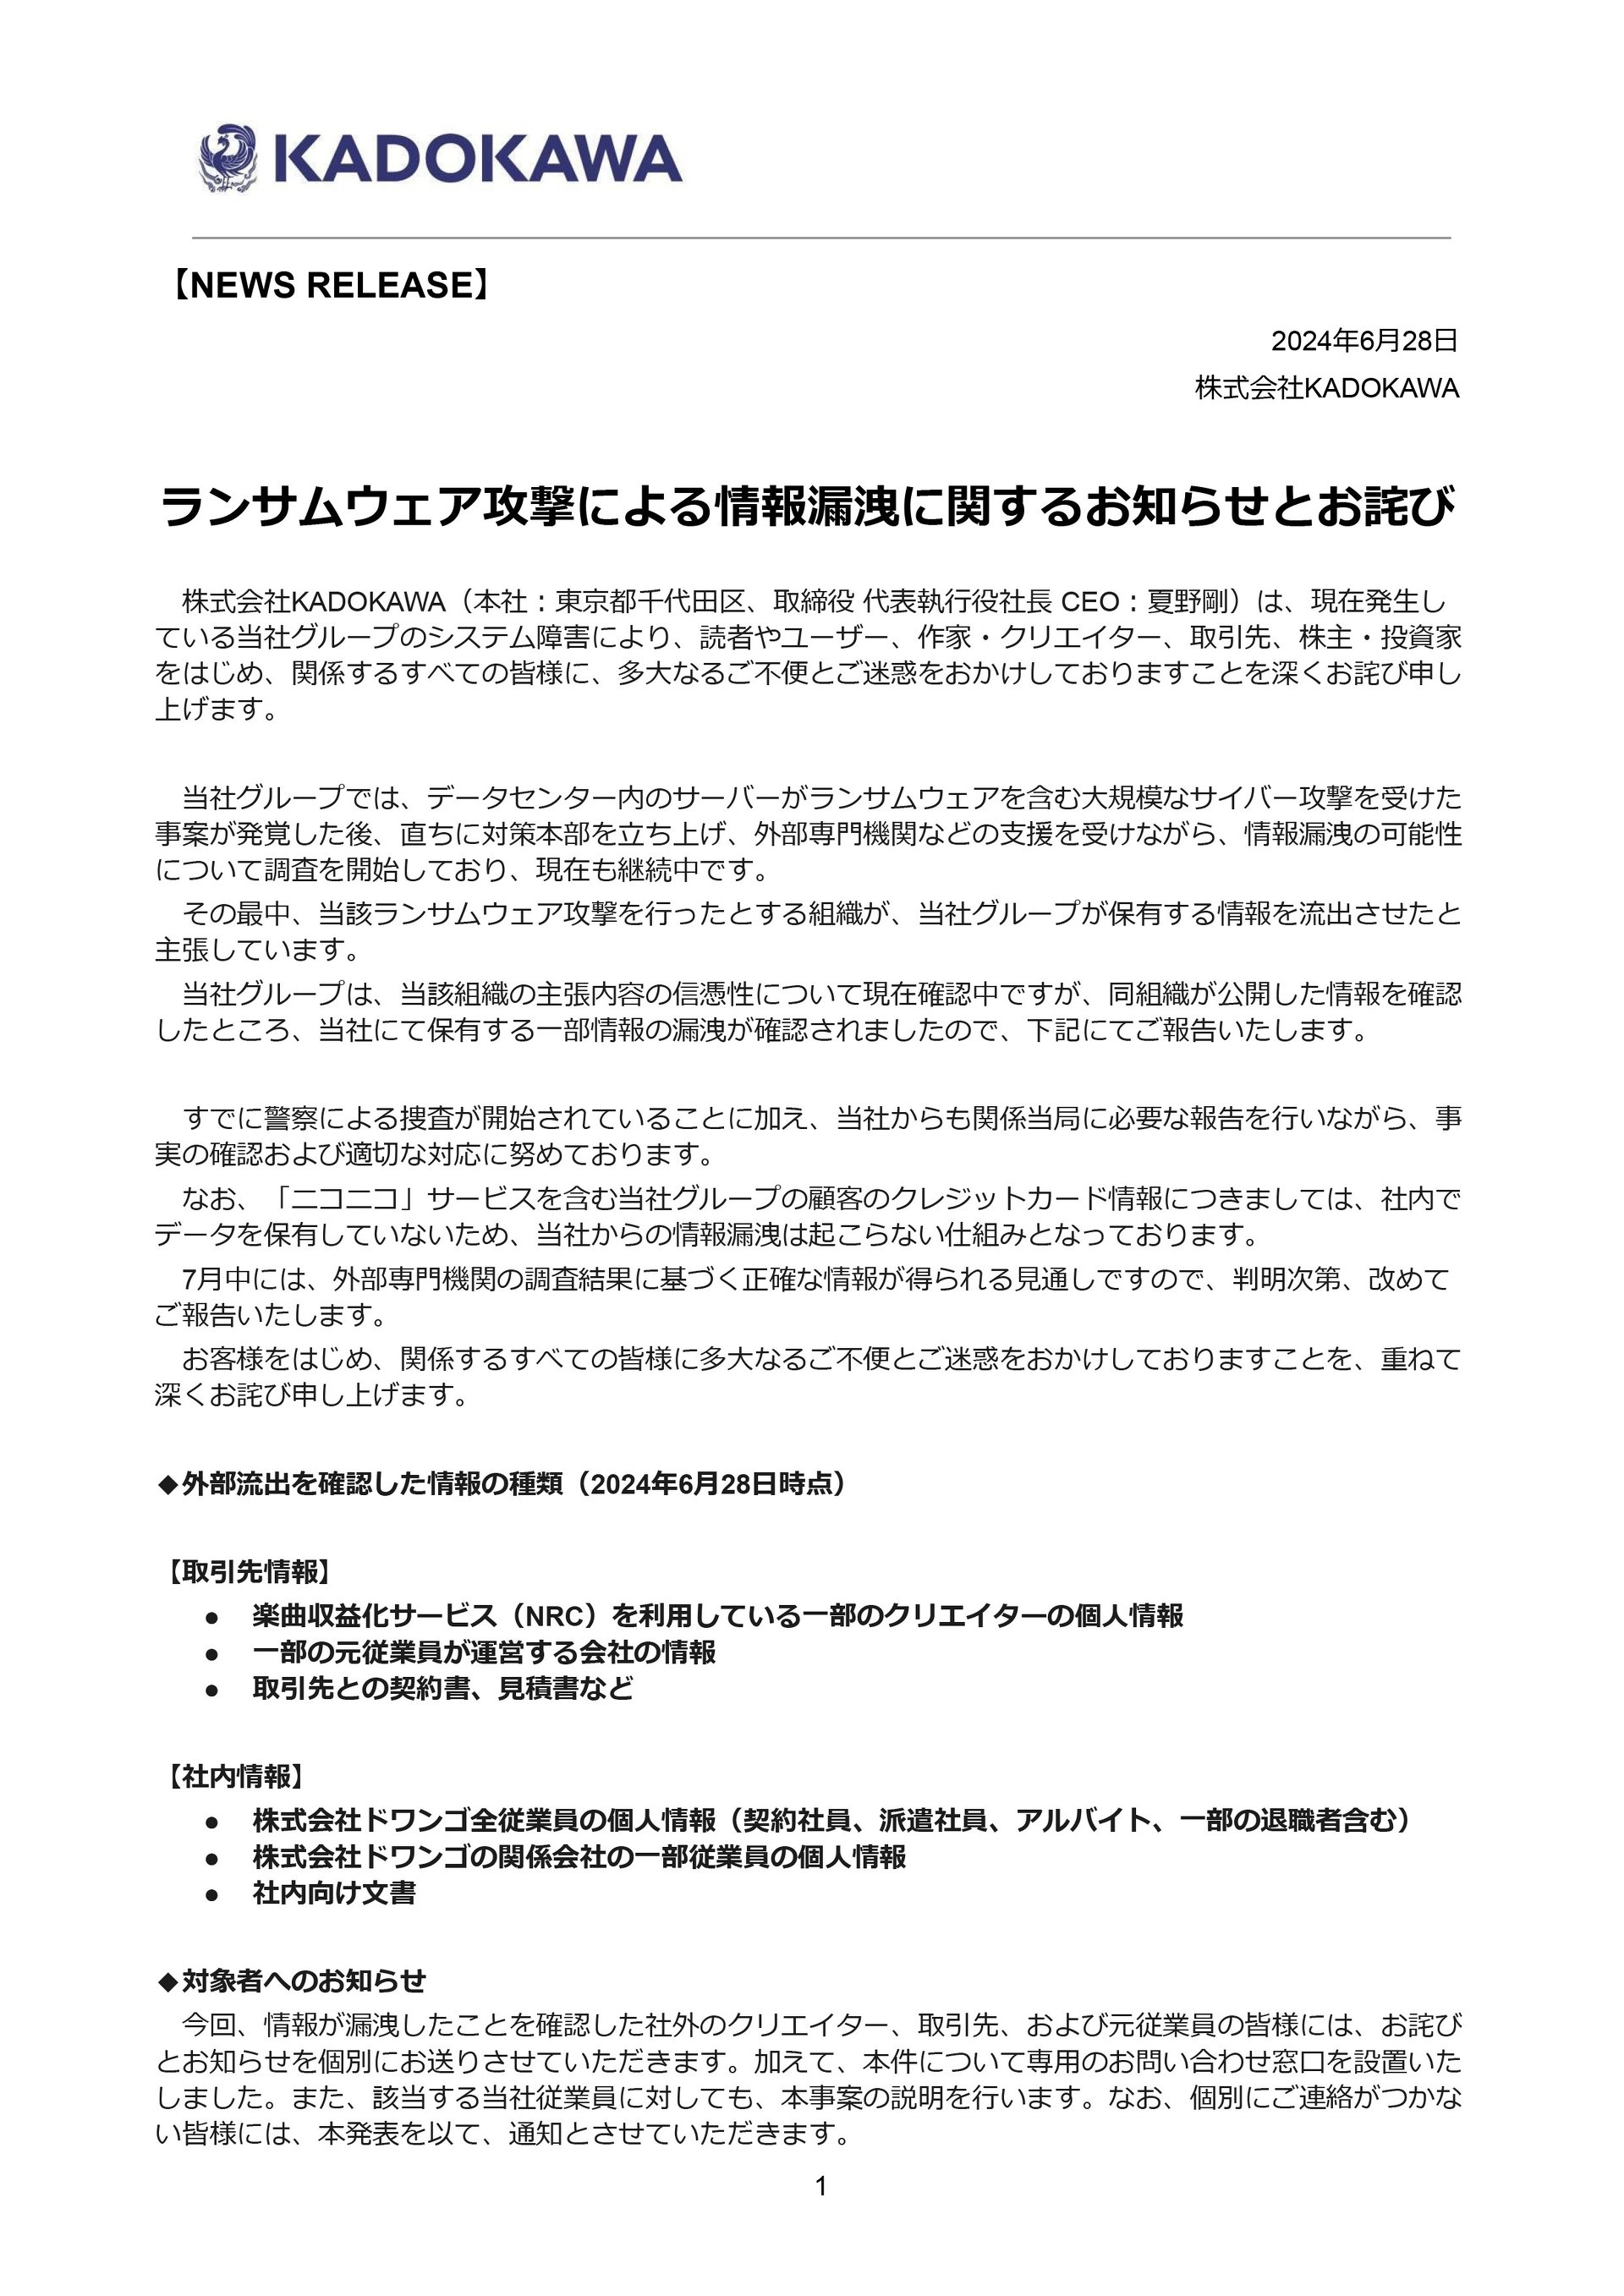 KADOKAWA、クリエイターの個人情報漏えいを確認 取引先との契約書なども - ITmedia NEWS - ITmedia NEWS